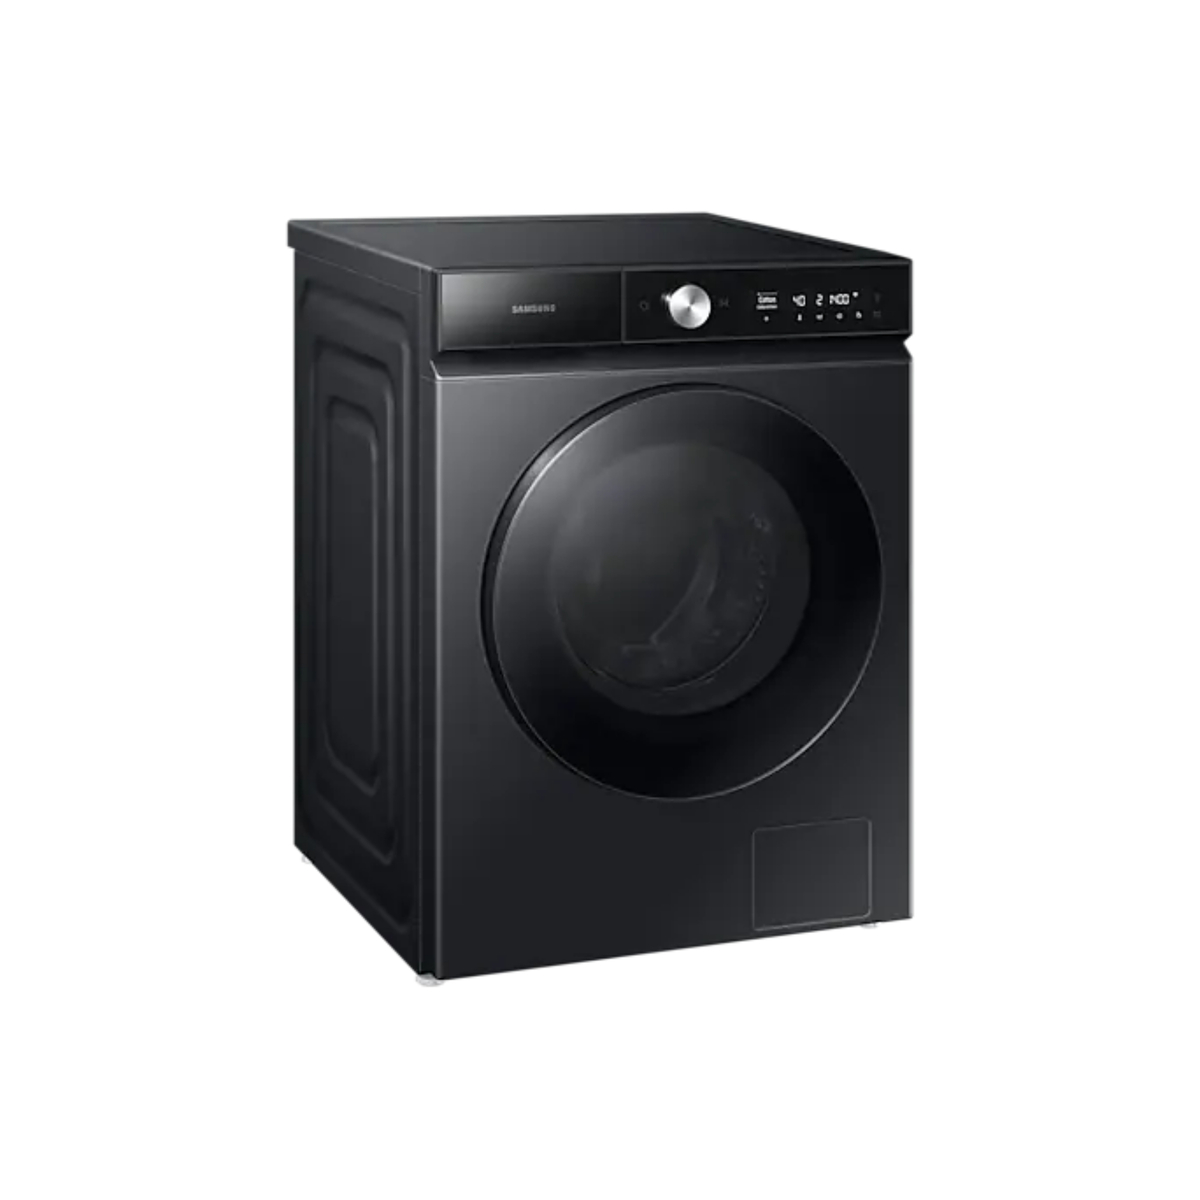 Eco Egg Washing Machine-Can do Dry Washing and Water Washing – WM machinery